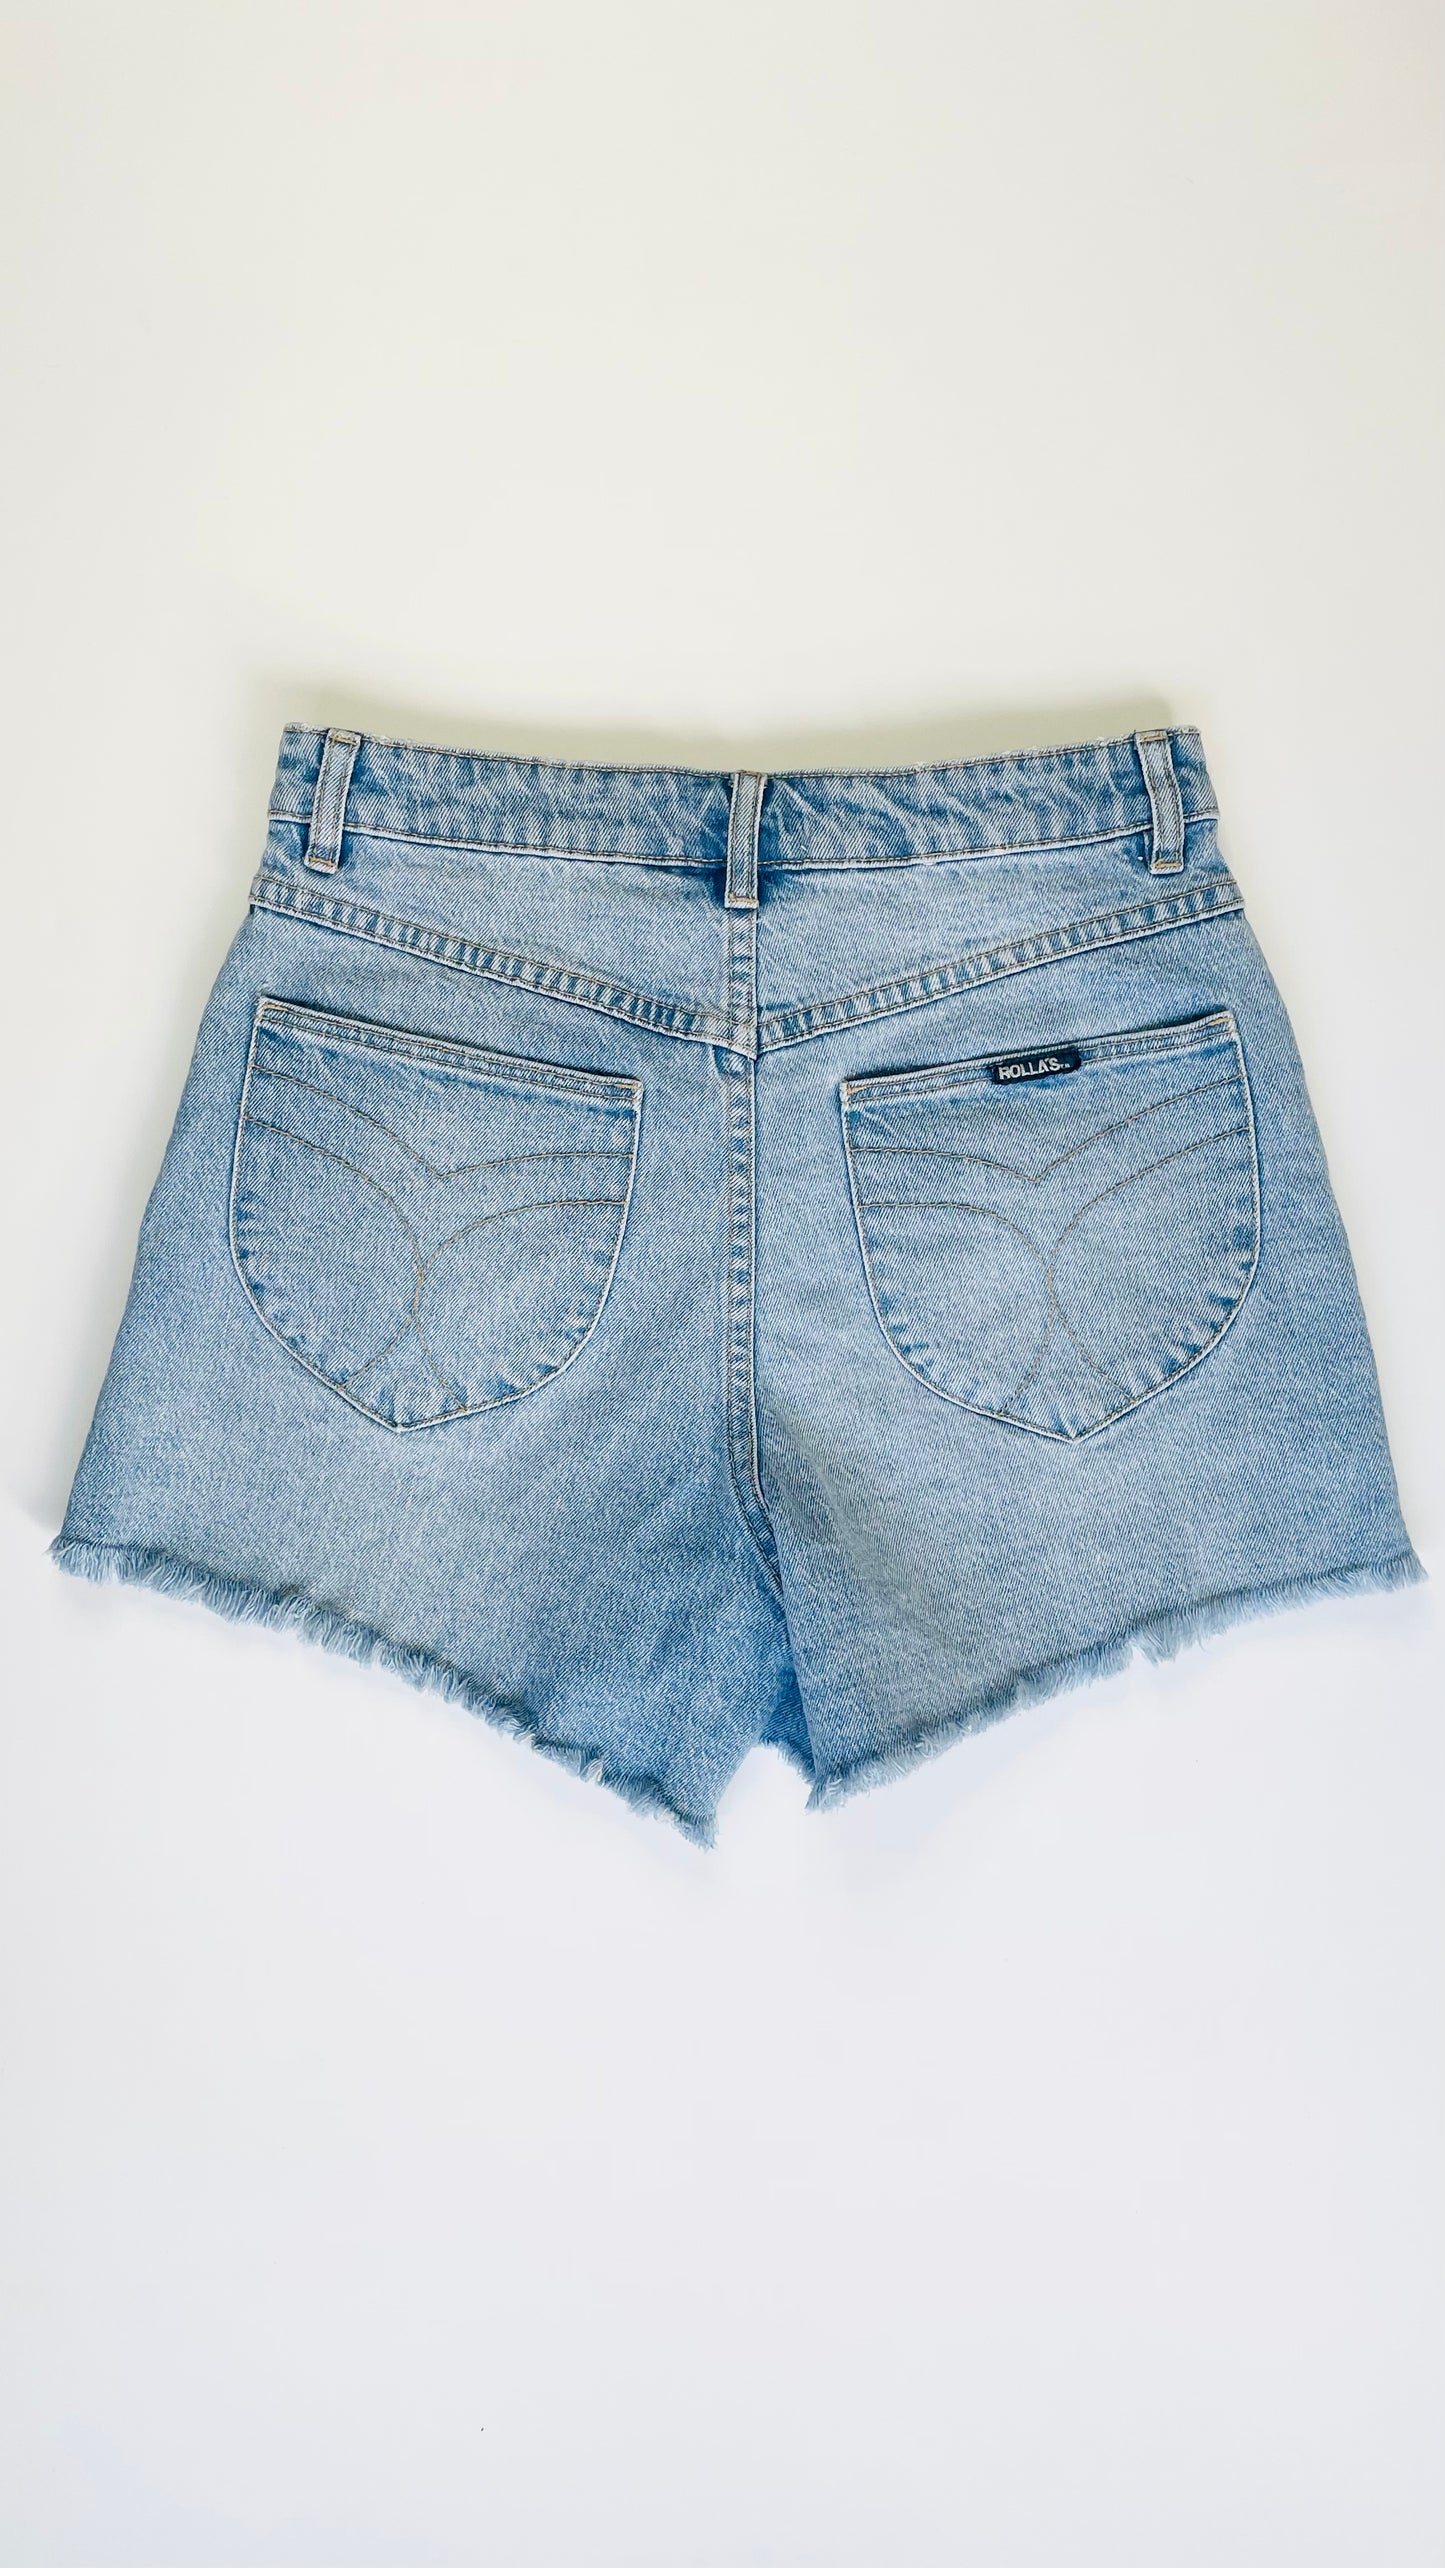 Pre-Loved ROLLAS light blue denim shorts - Size 28